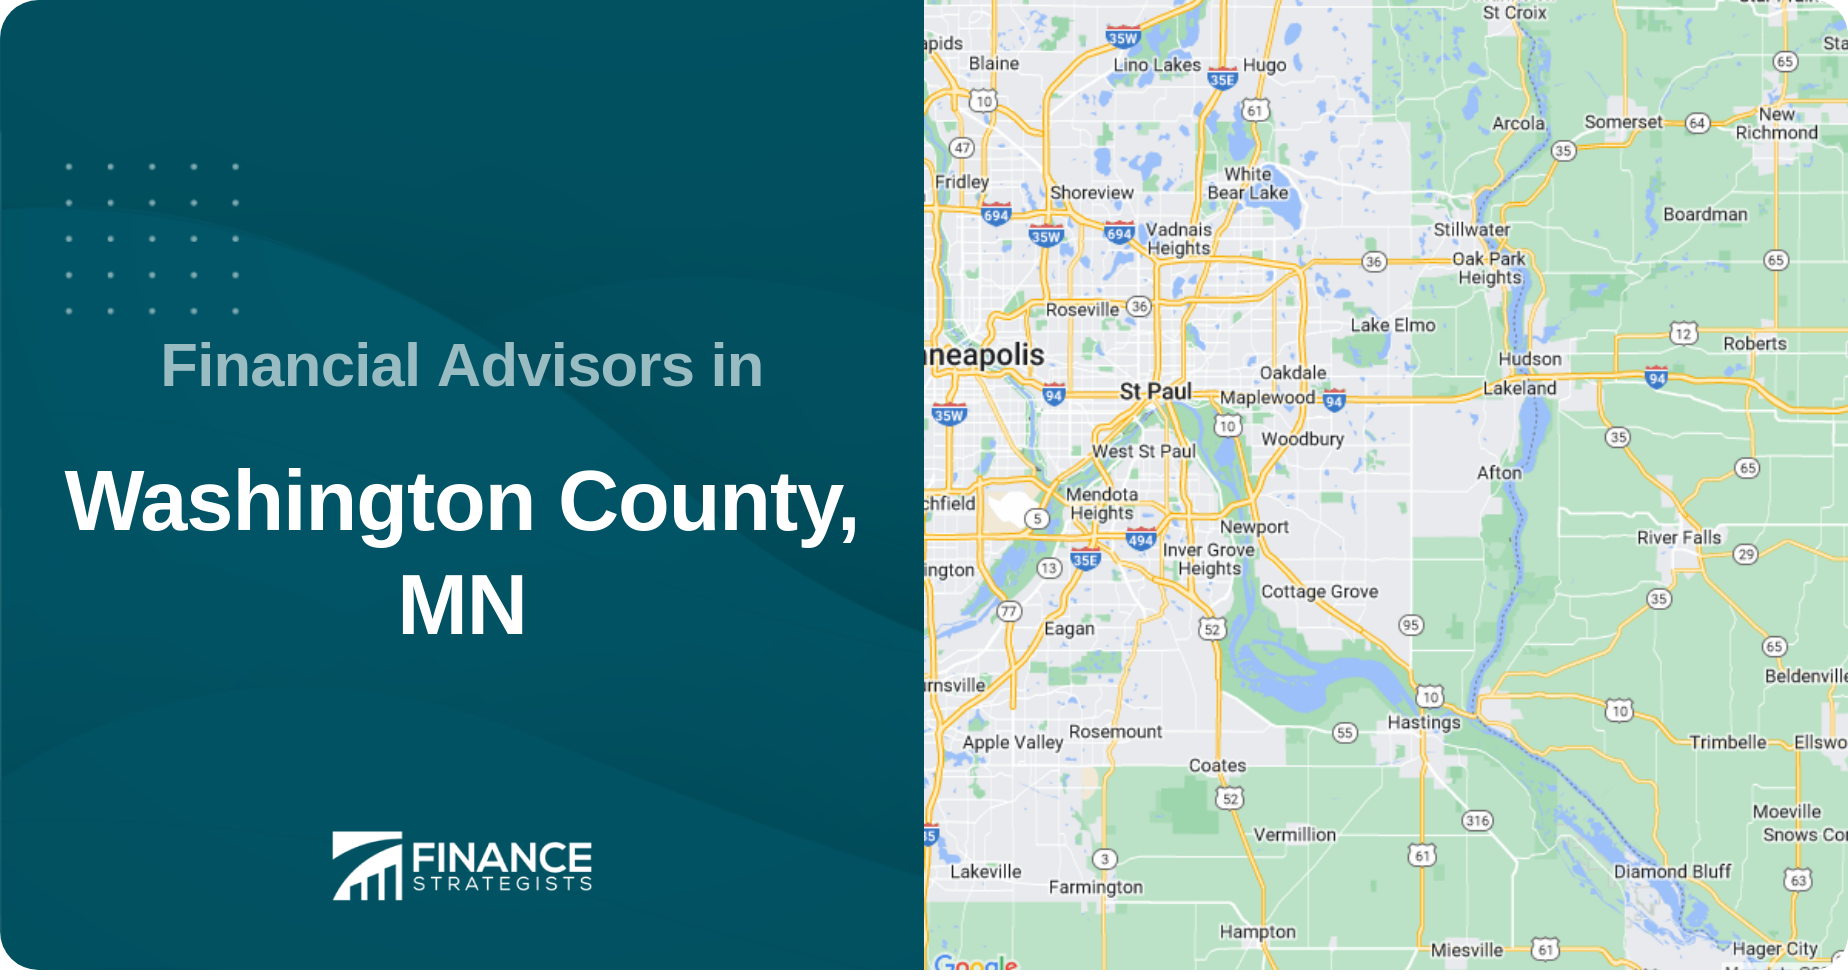 Financial Advisors in Washington County, MN